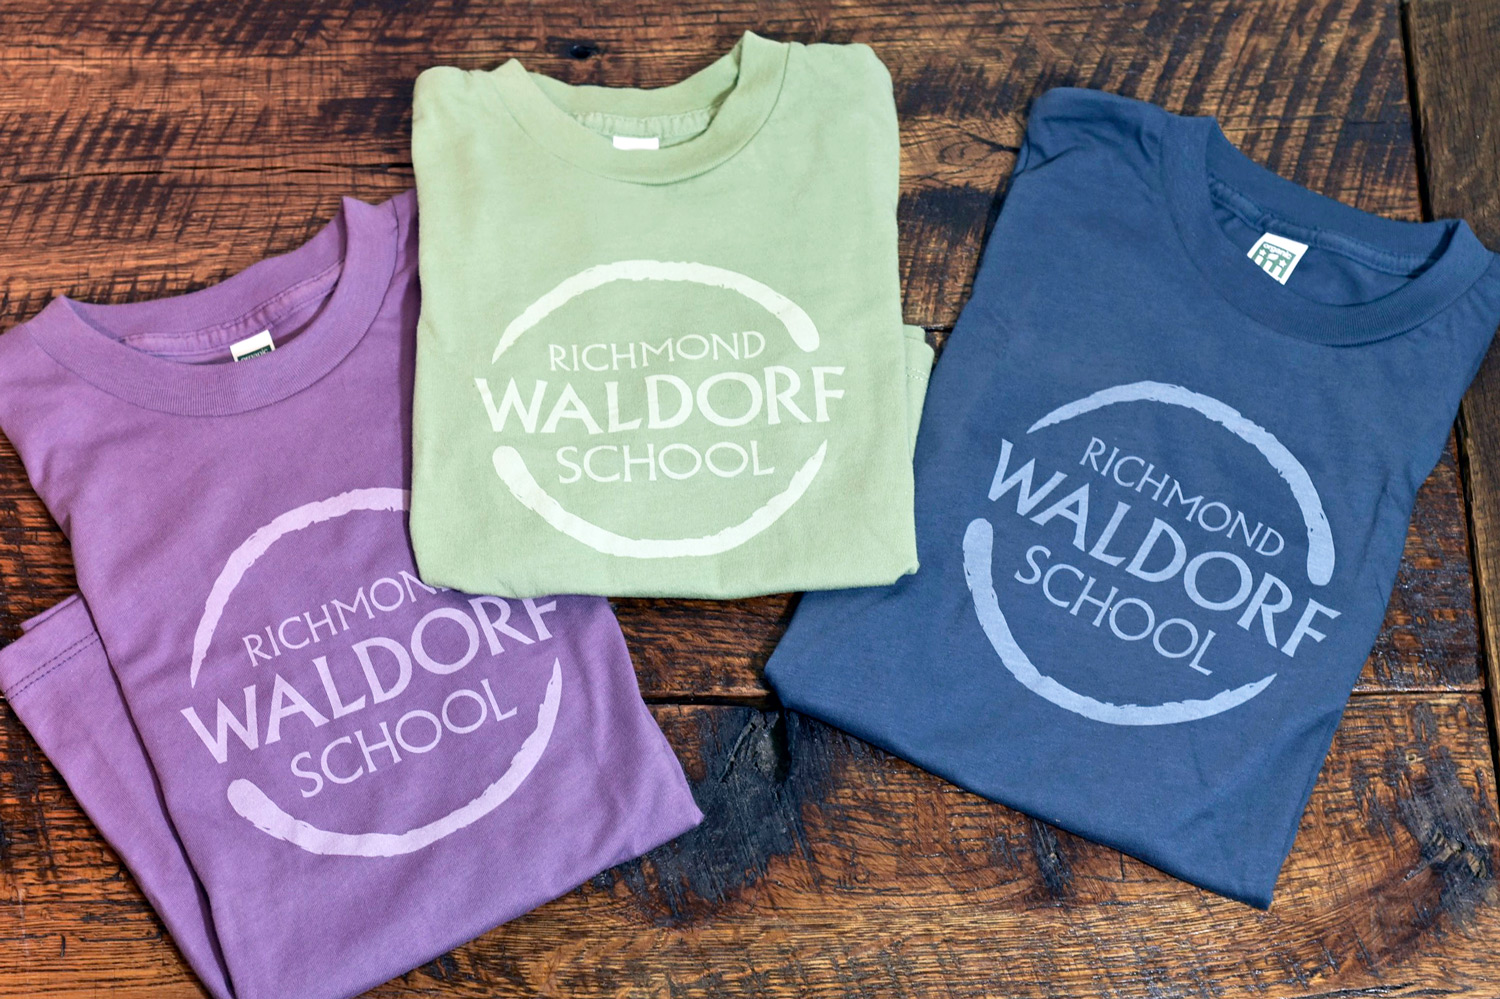 Richmond Waldorf School shirts